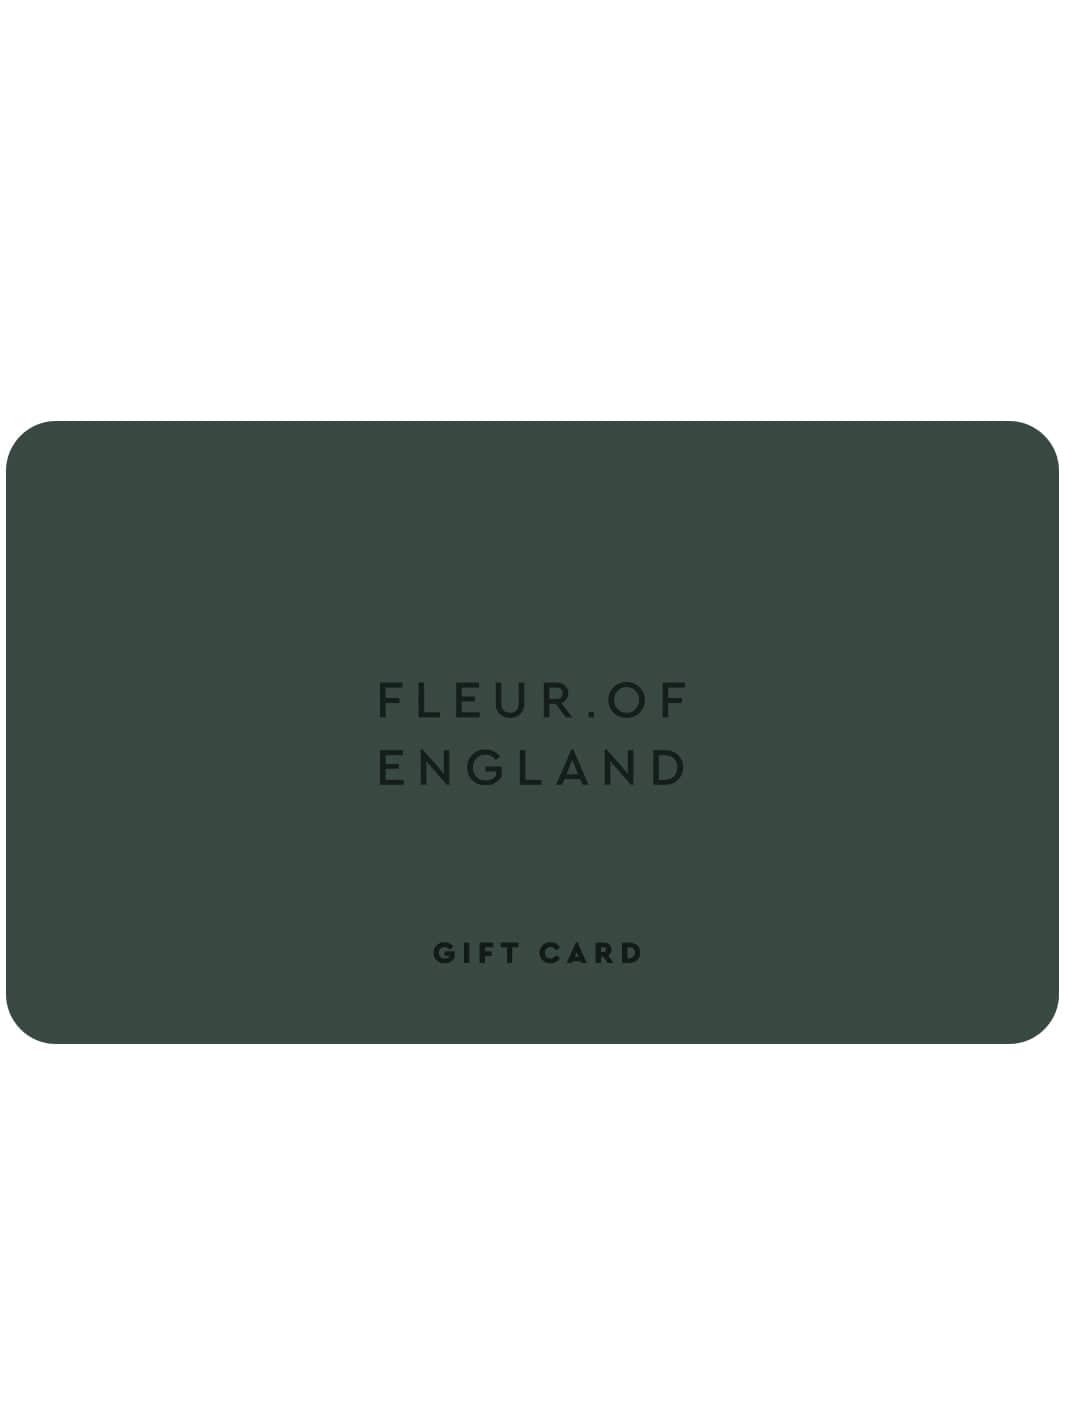 FleurOfEngland Gift Card